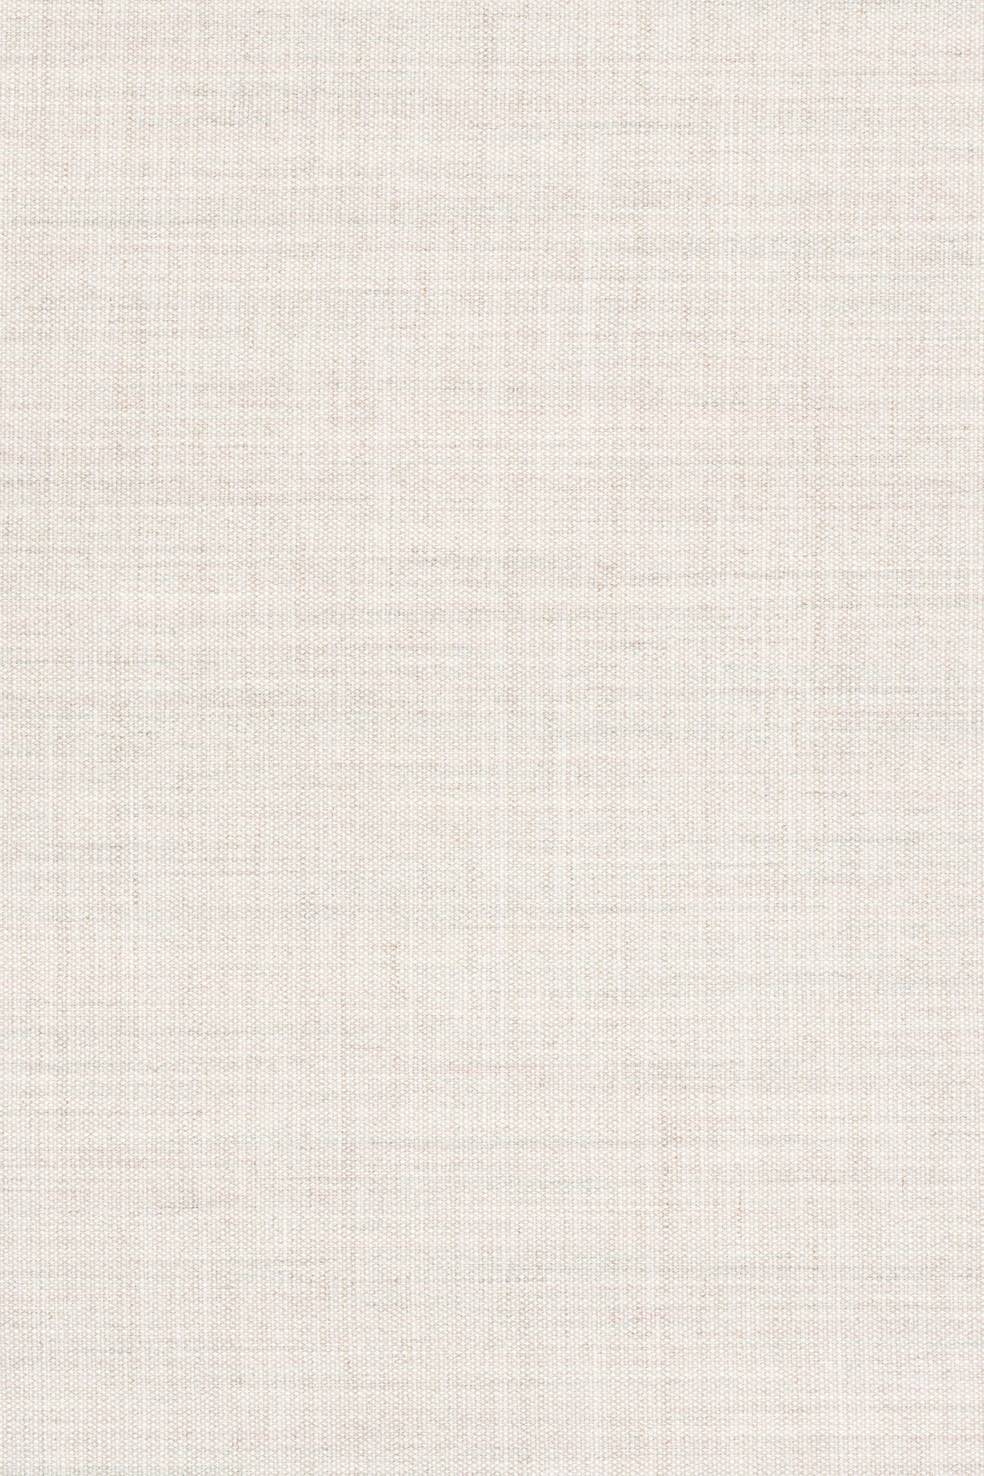 Fabric sample Canvas 2 216 white